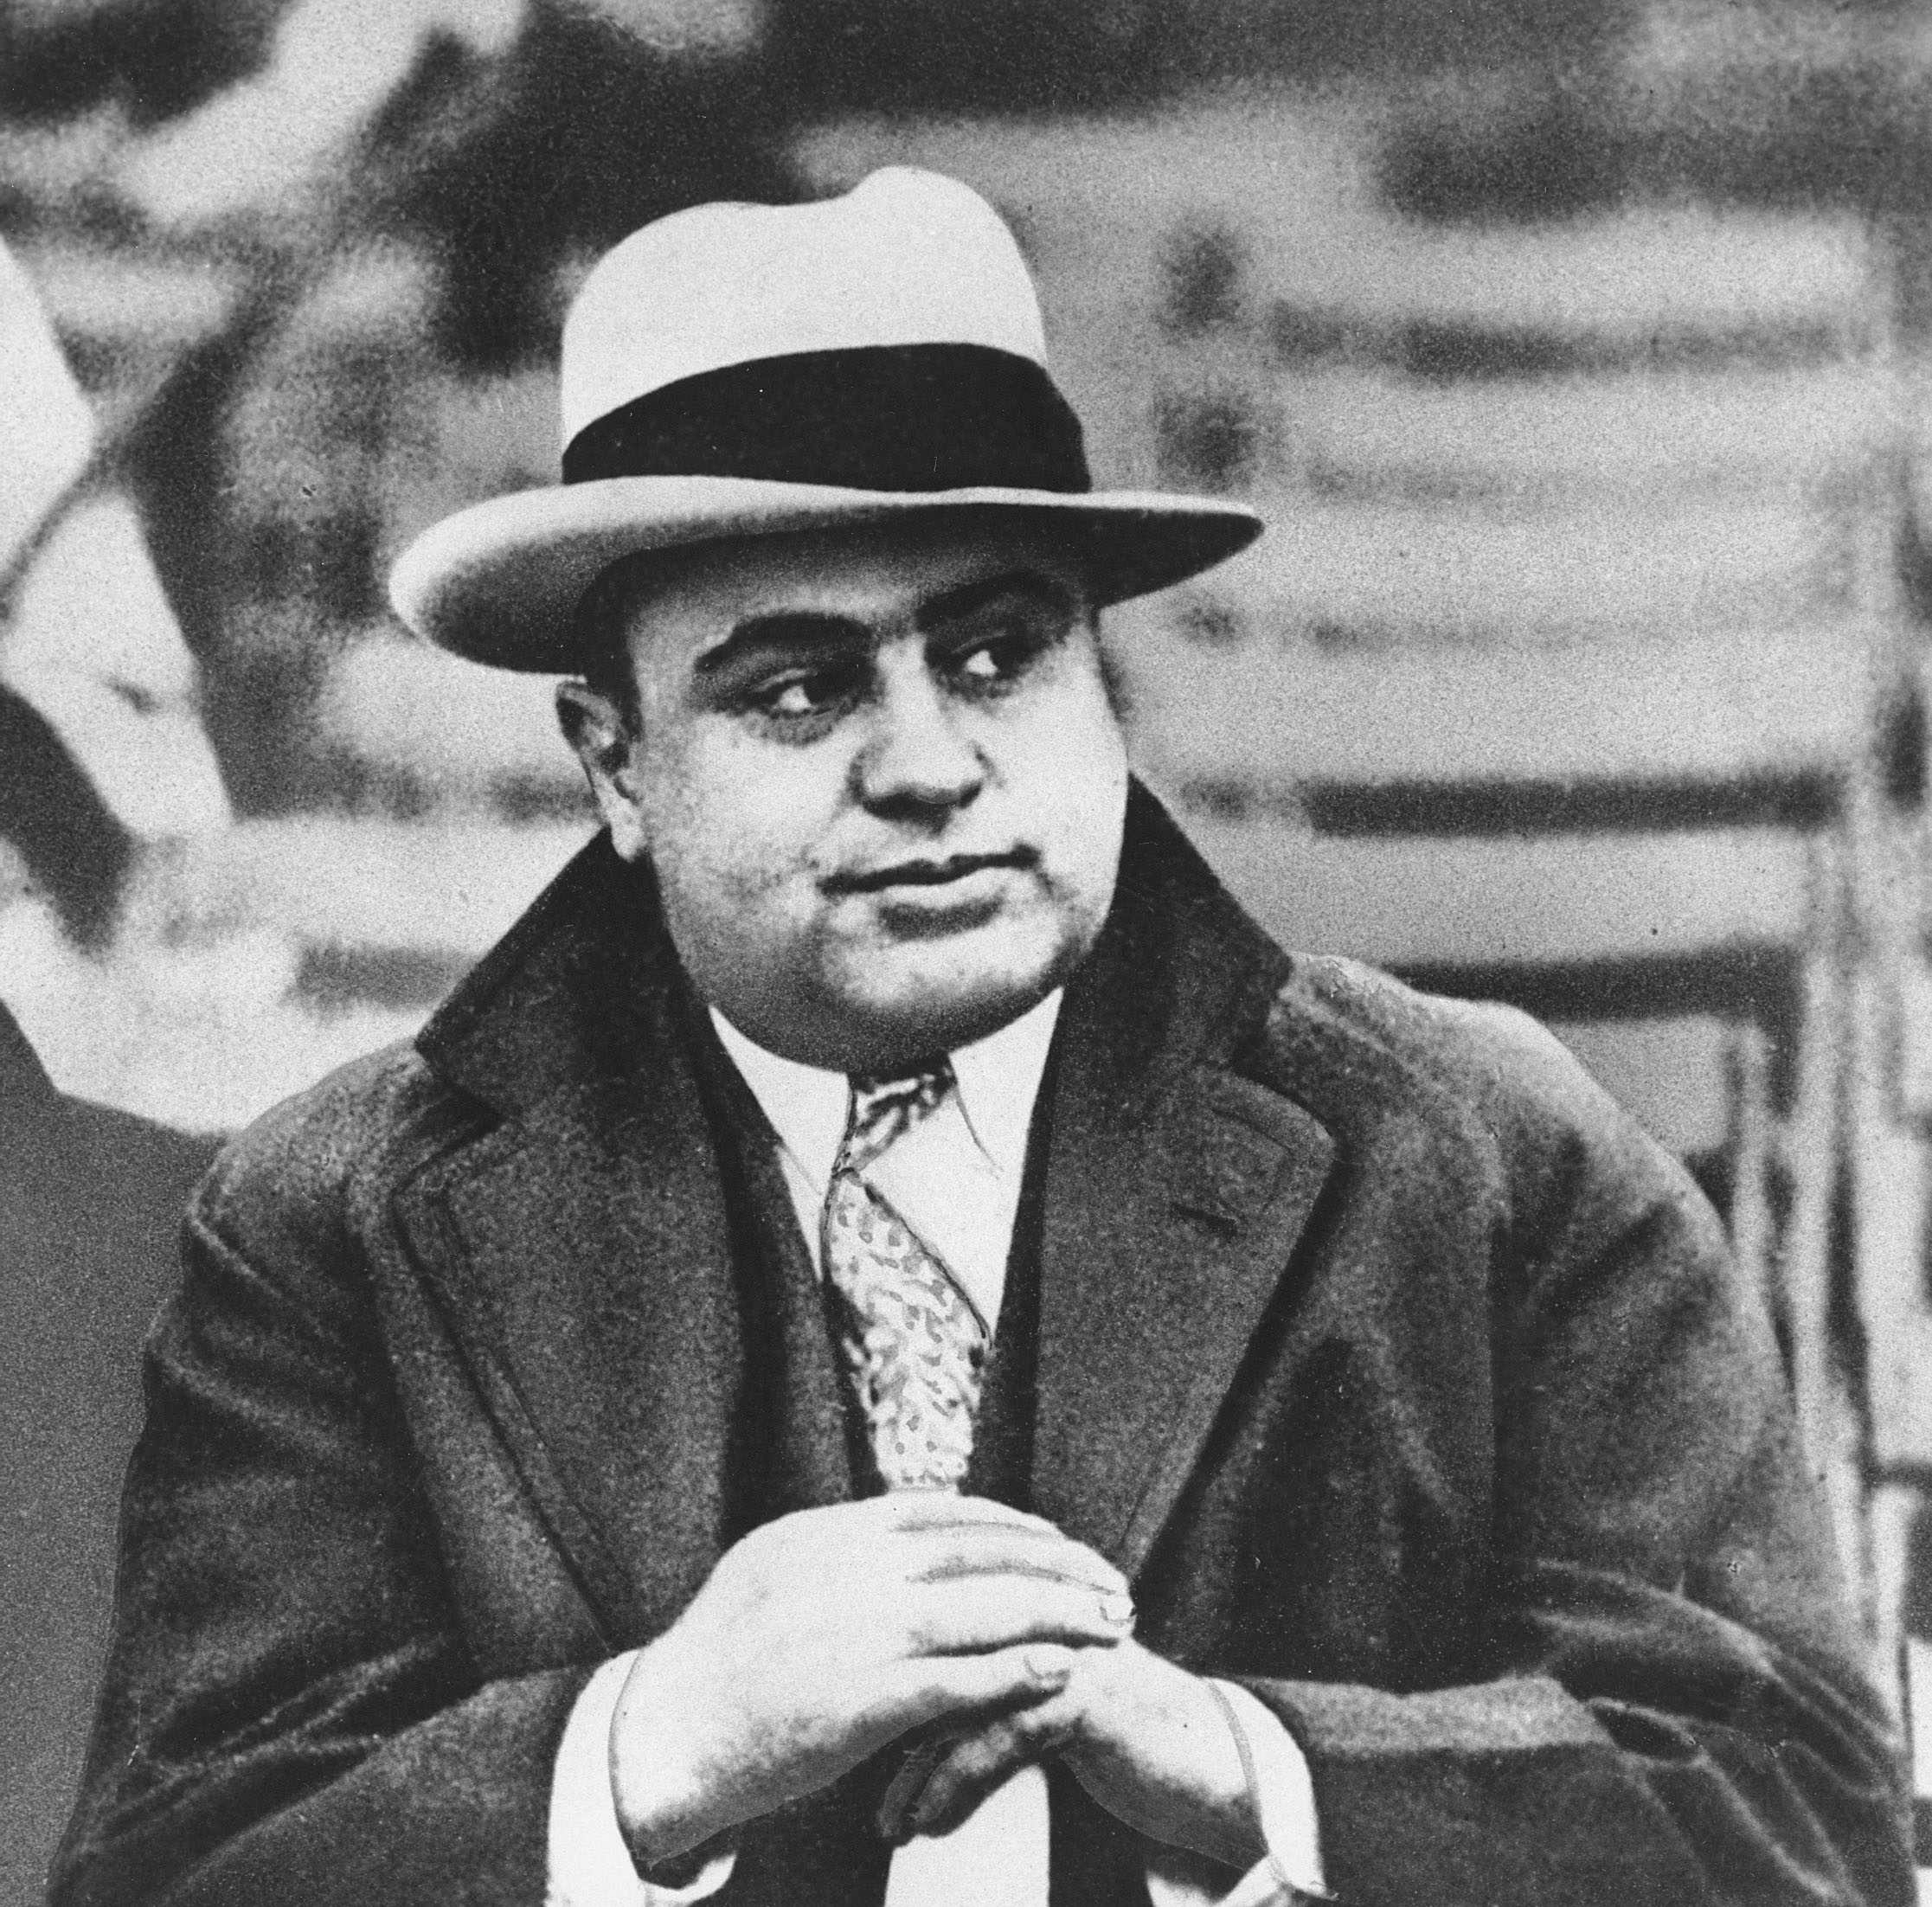 Al Capone sitting down